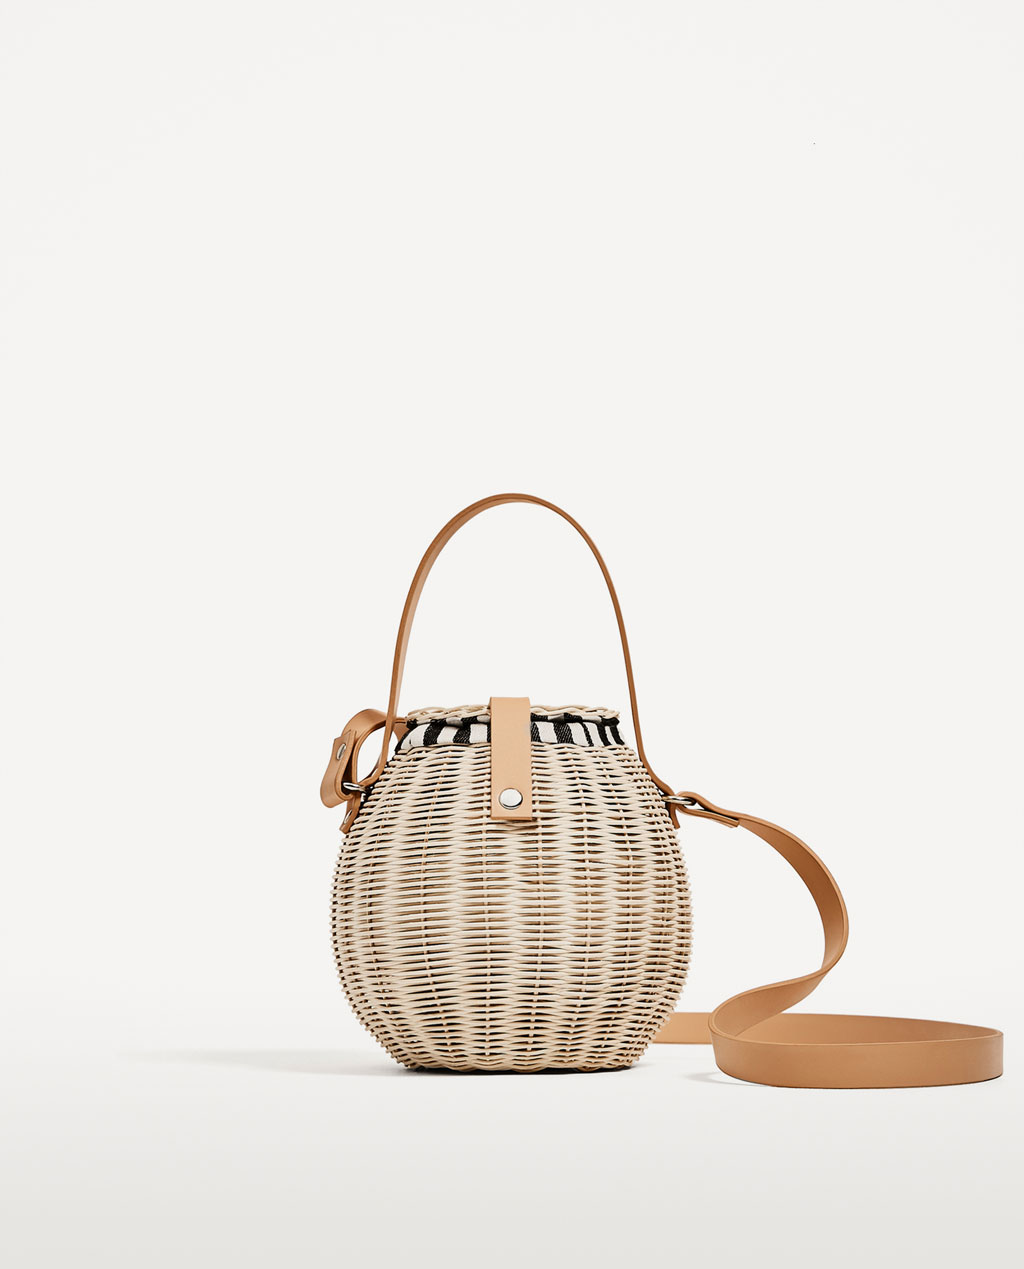 Bombshells: Jane Birkin and Her Basket Bag — Bobbins & Bombshells